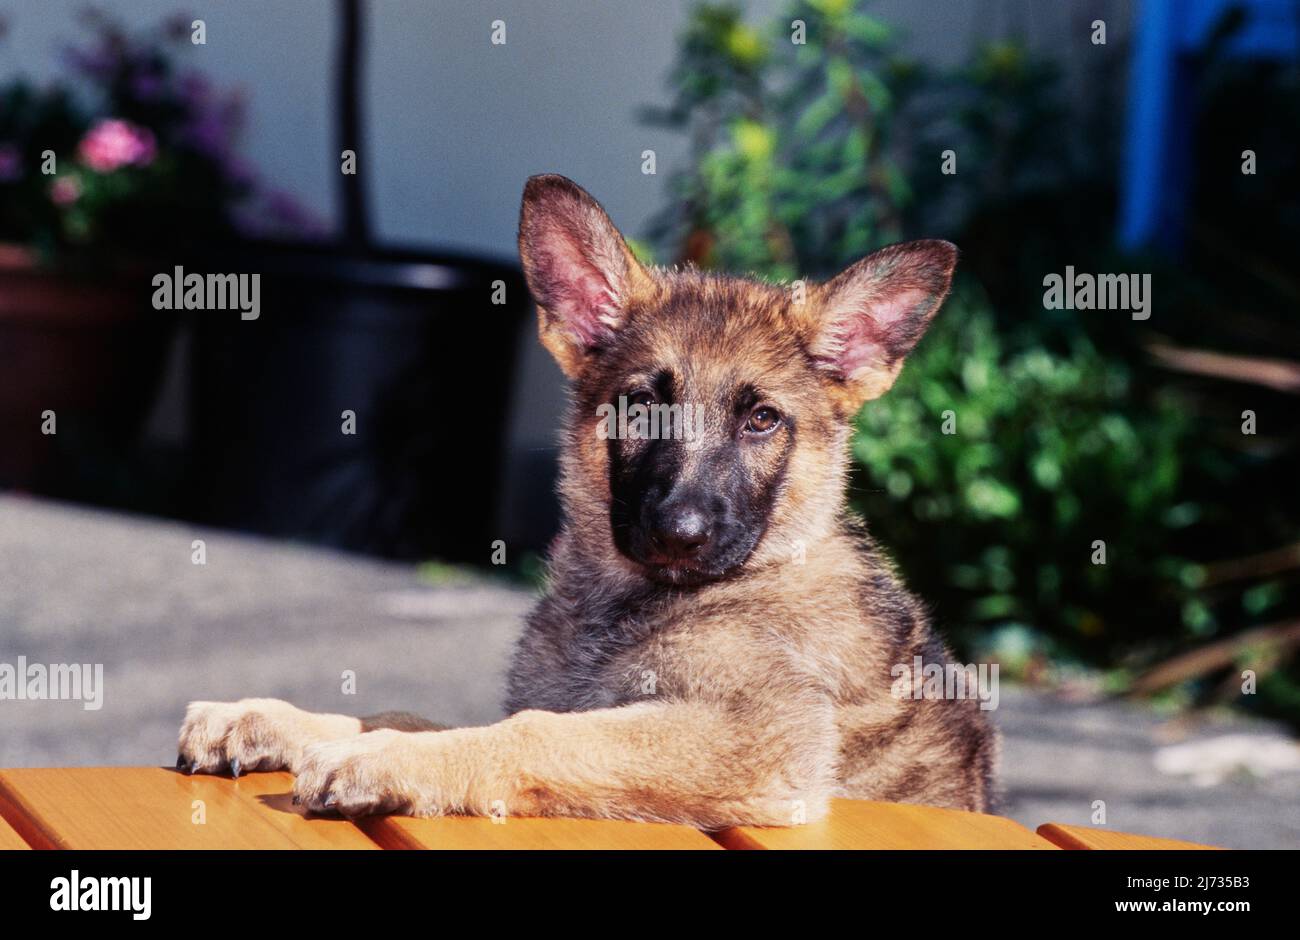 German shepherd puppy raised up on wooden table Stock Photo